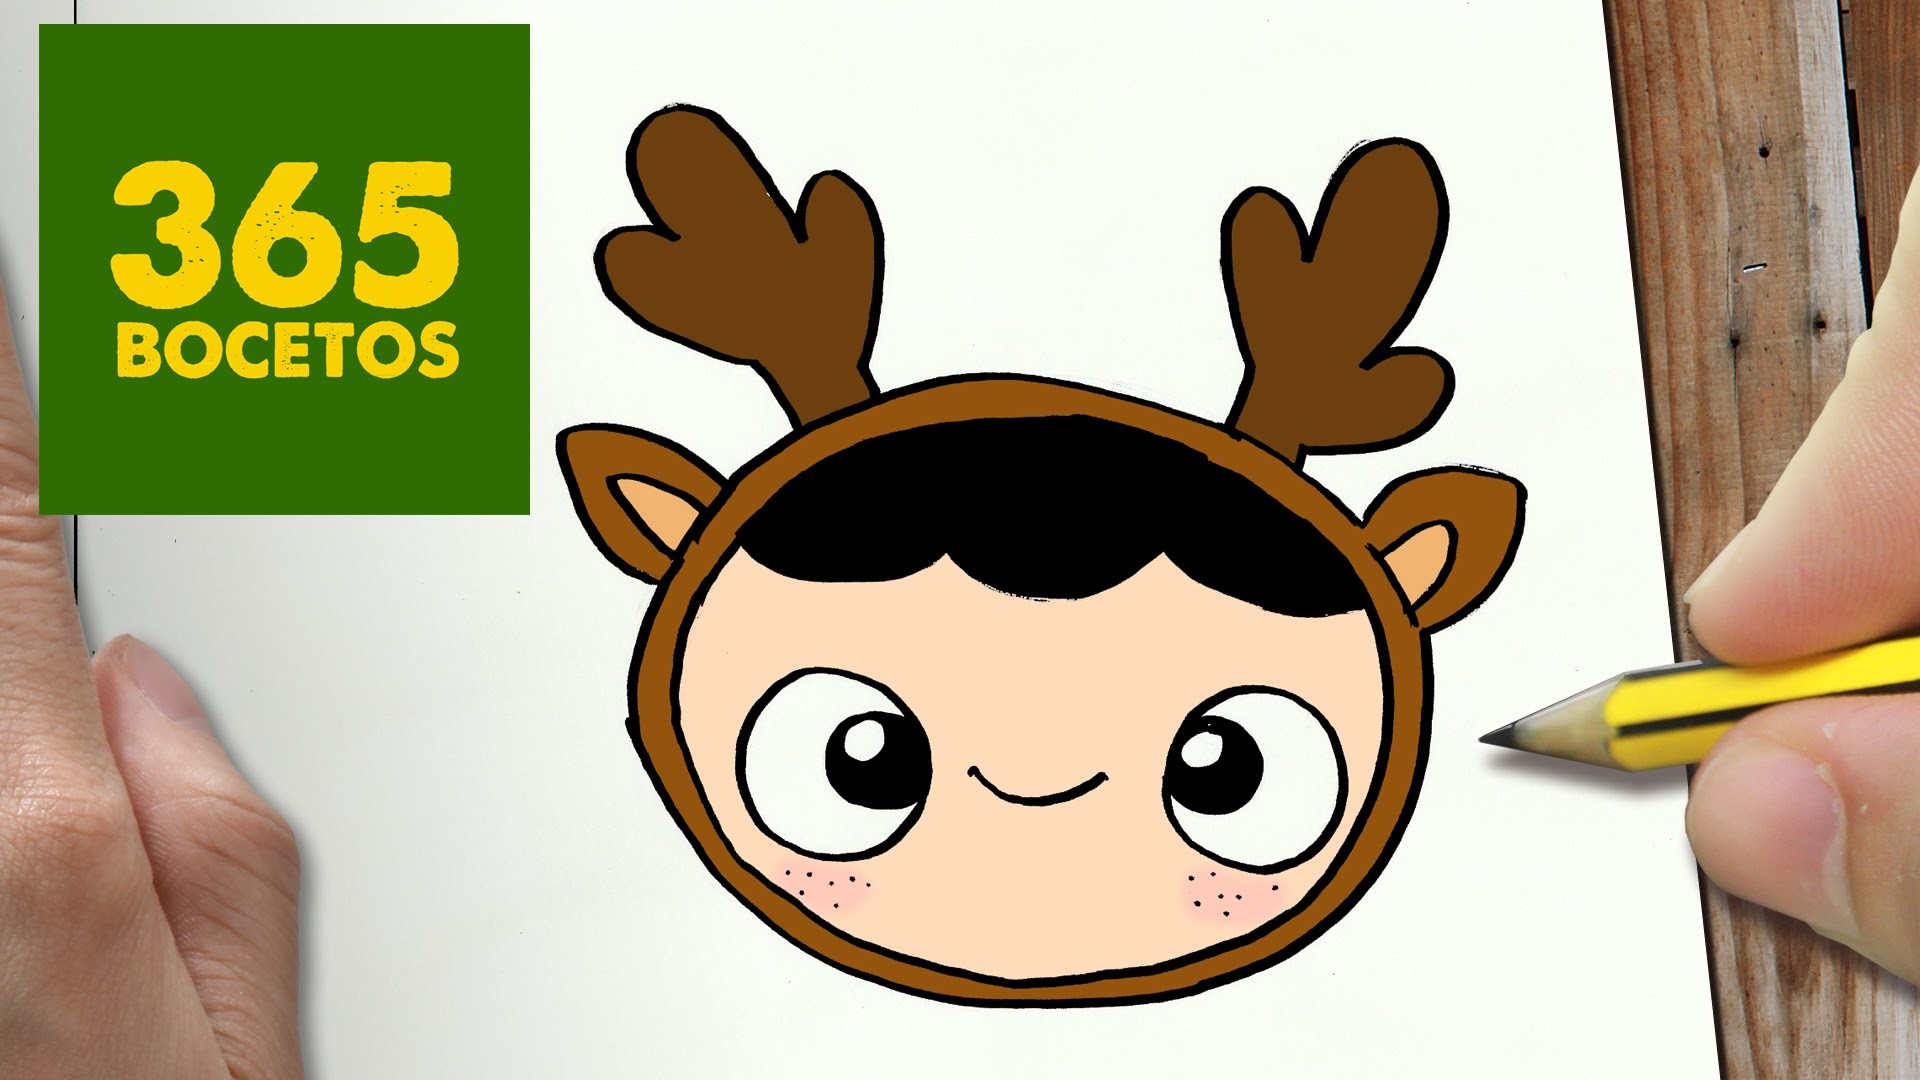 COMO DIBUJAR UN NIÑO RENO PARA NAVIDAD PASO A PASO: Dibujos kawaii navideños - draw reindeer child